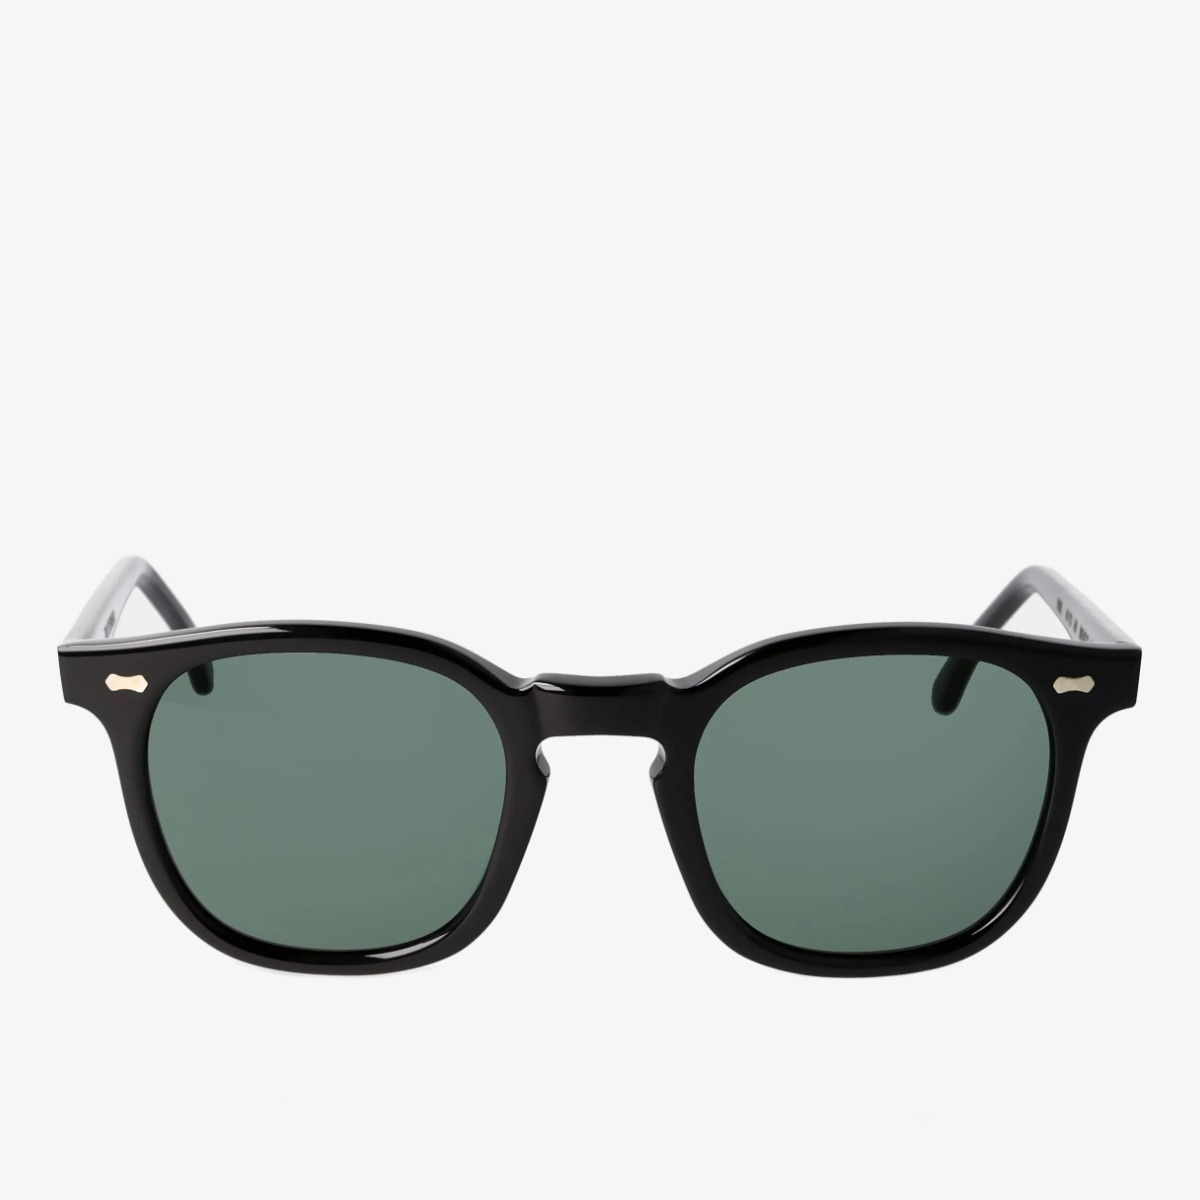 TBD Eyewear Twill black frame green lenses sunglasses